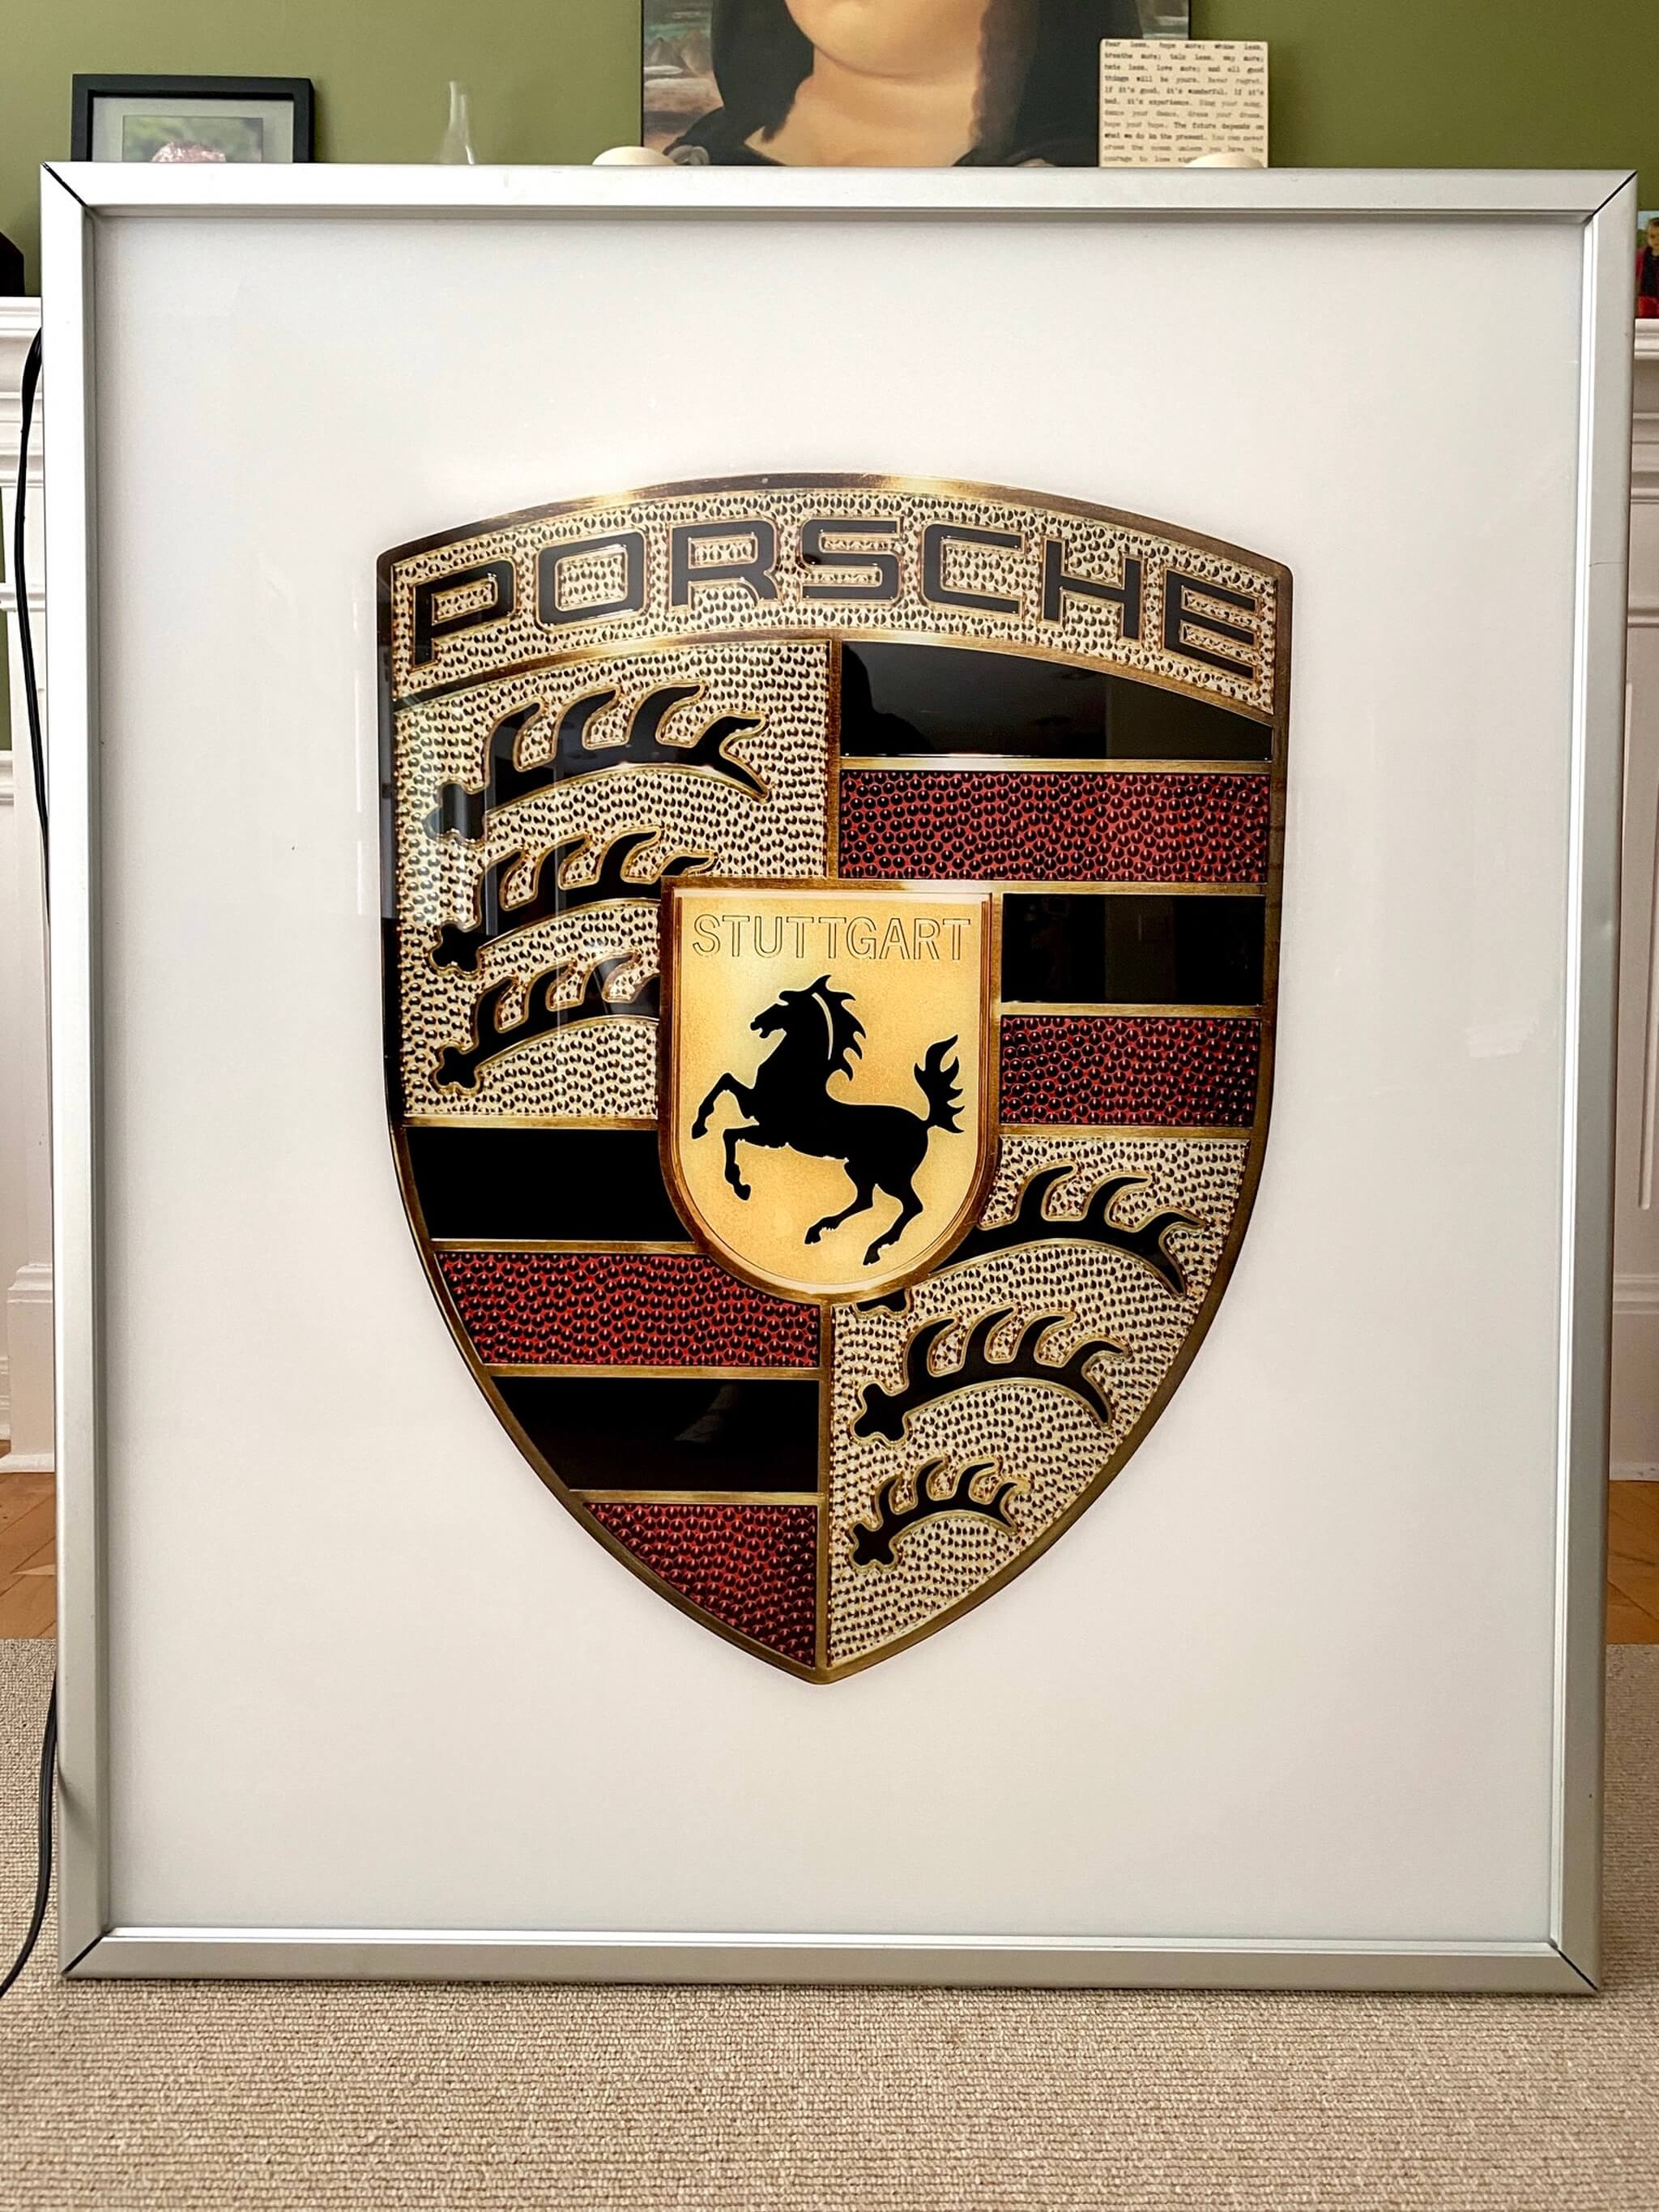 Double-sided Illuminated Porsche Auto Show Sign (44" x 38")